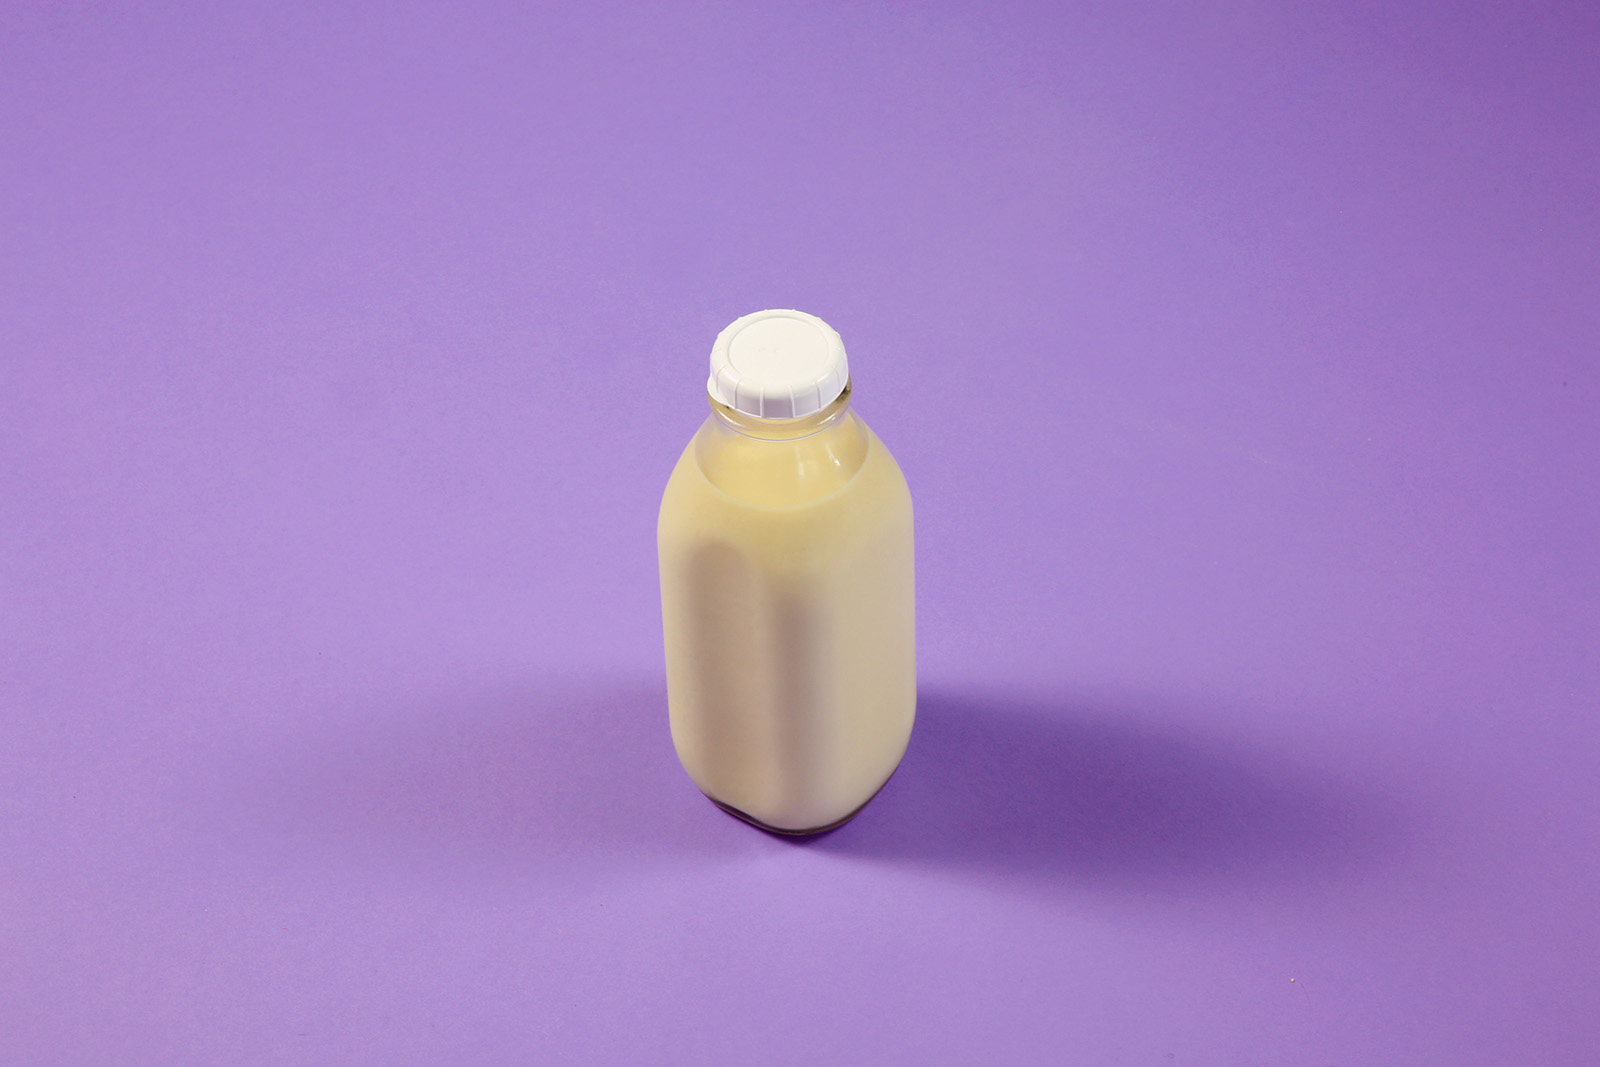 A refillable and reusable milk bottle